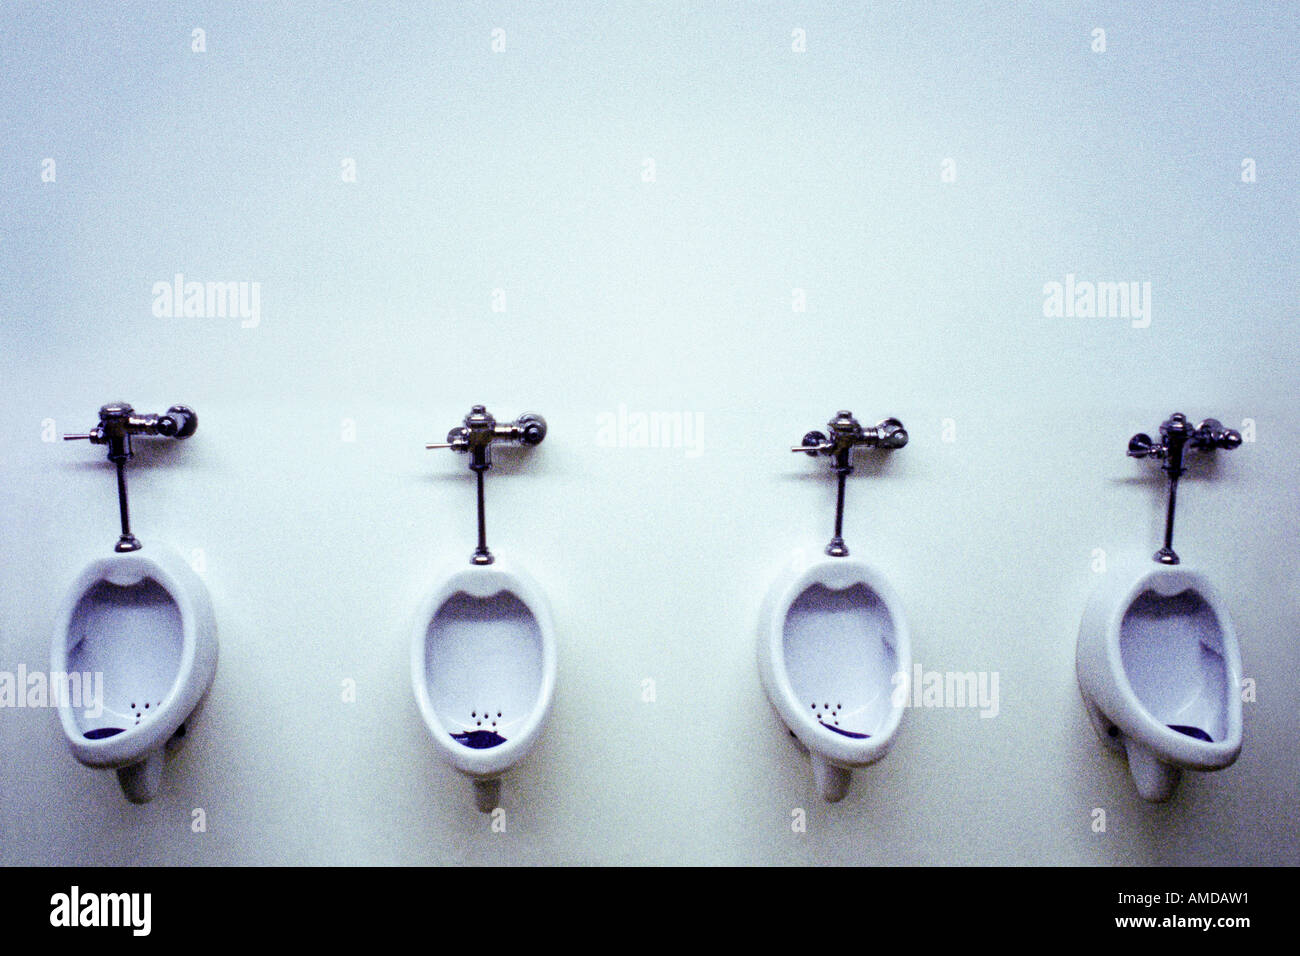 Row of Urinals in Bathroom Stock Photo